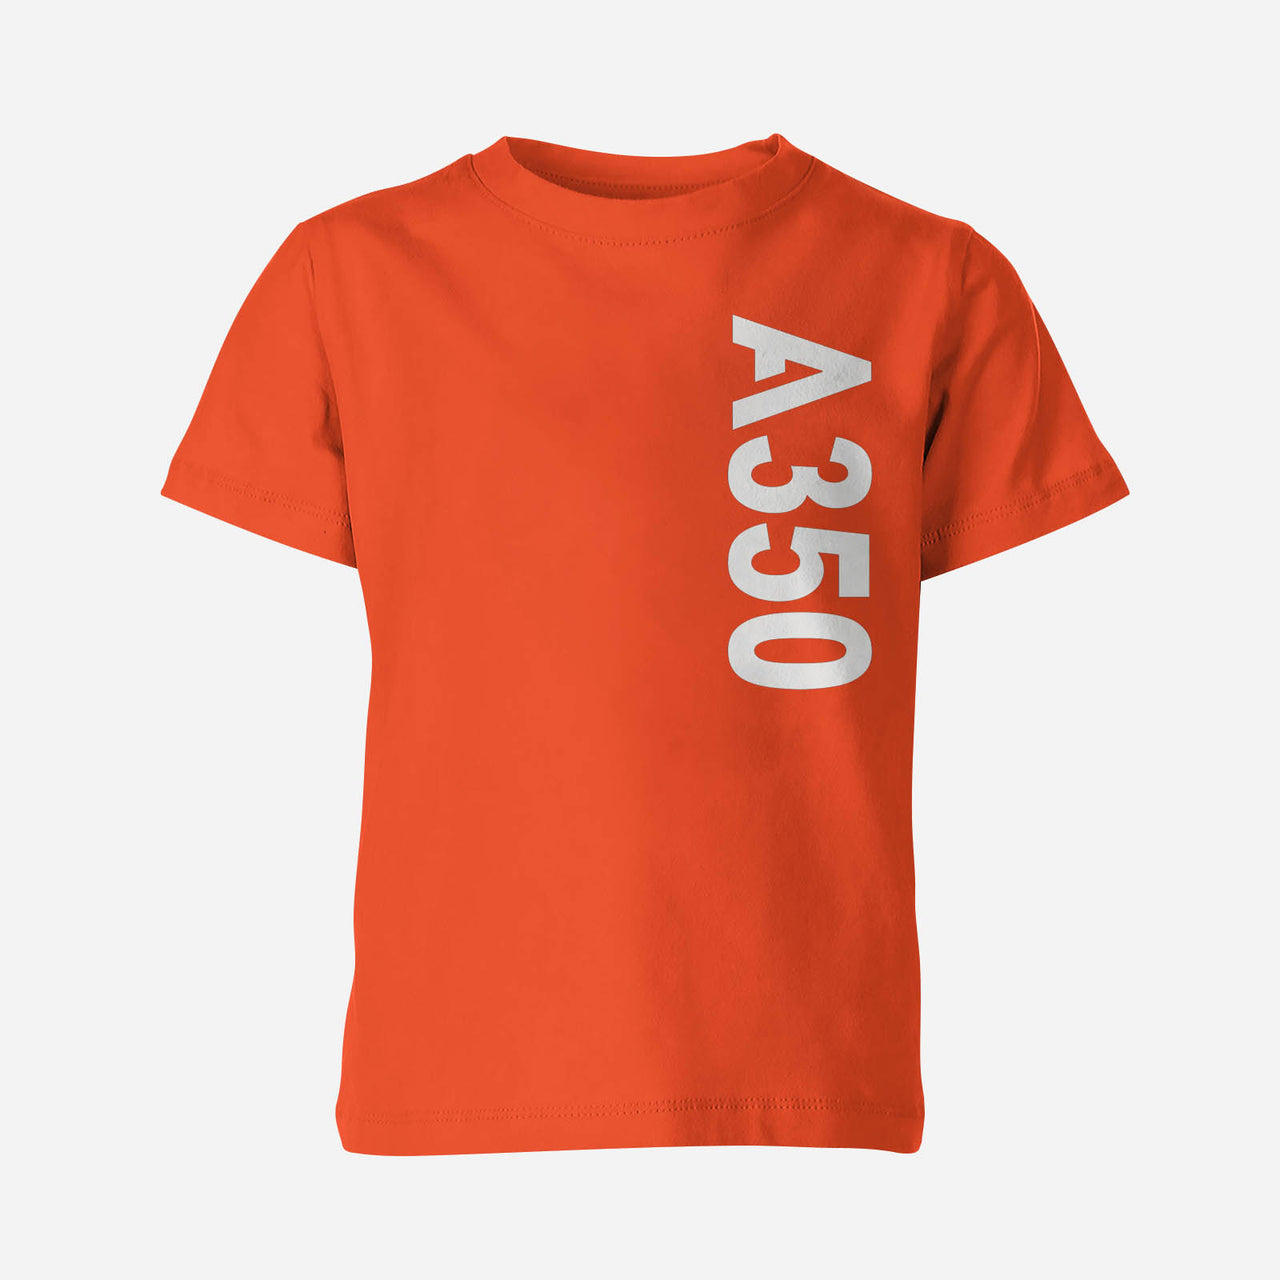 A350 Side Text Designed Children T-Shirts